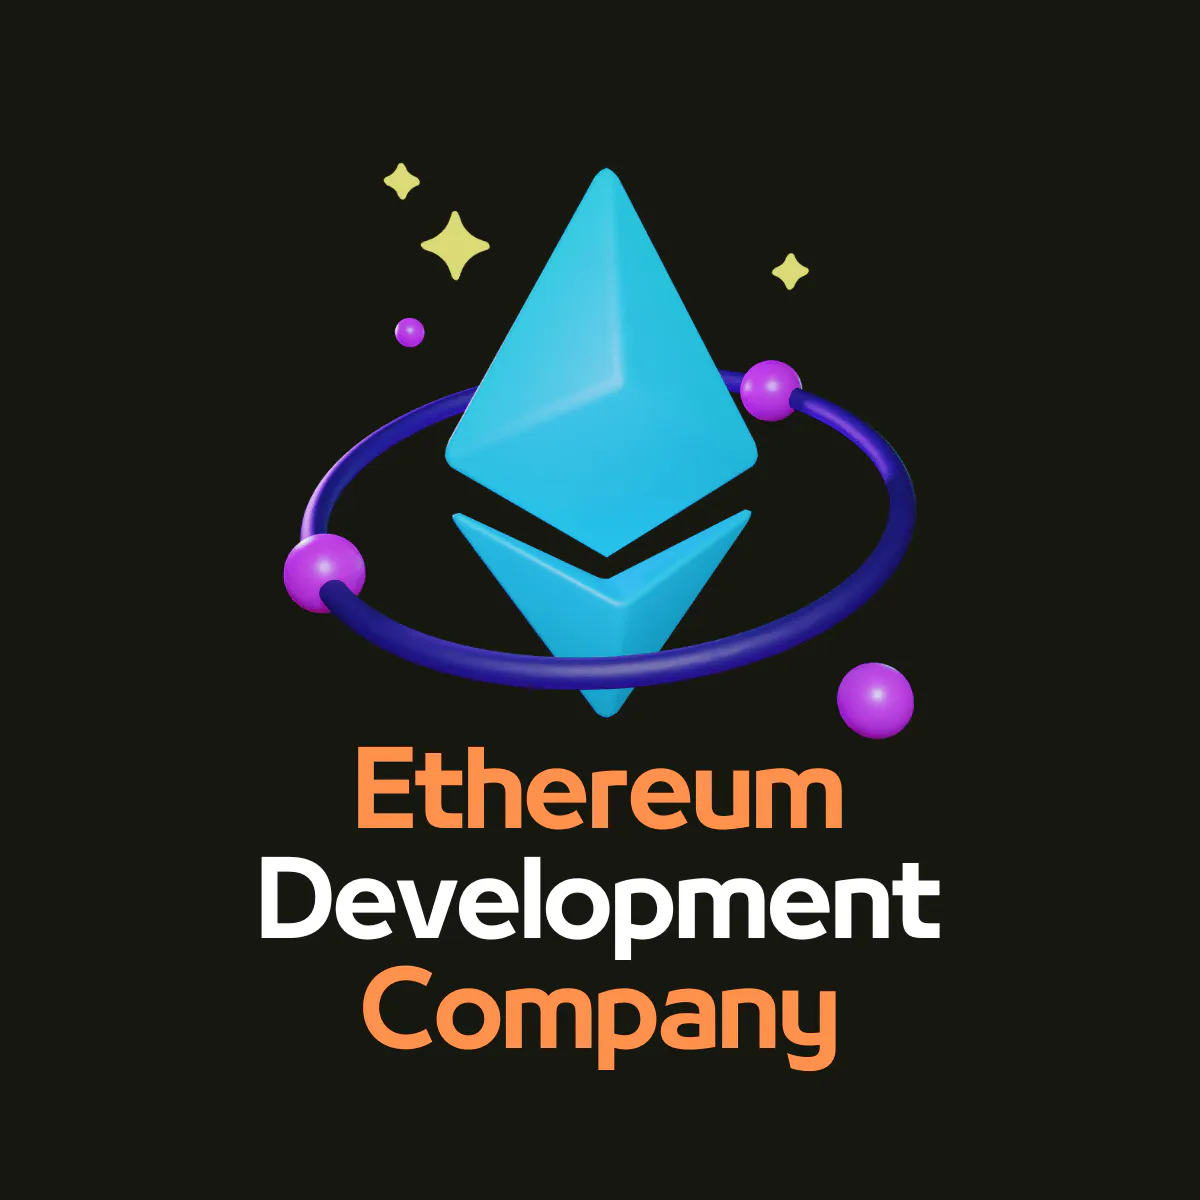 Ethereum Development